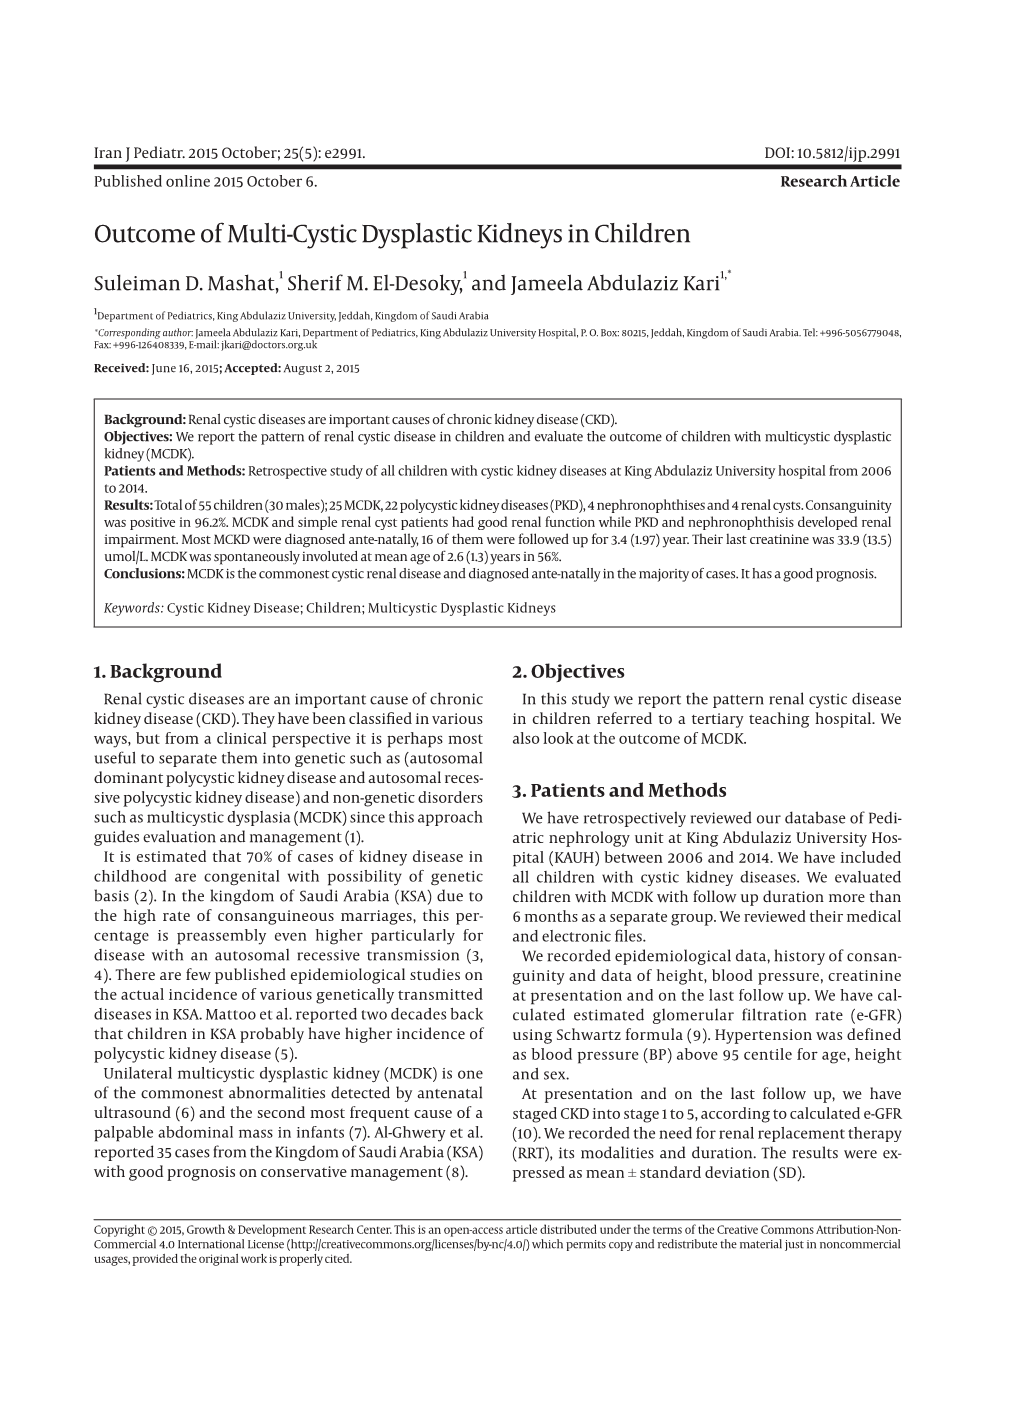 Outcome of Multi-Cystic Dysplastic Kidneys in Children